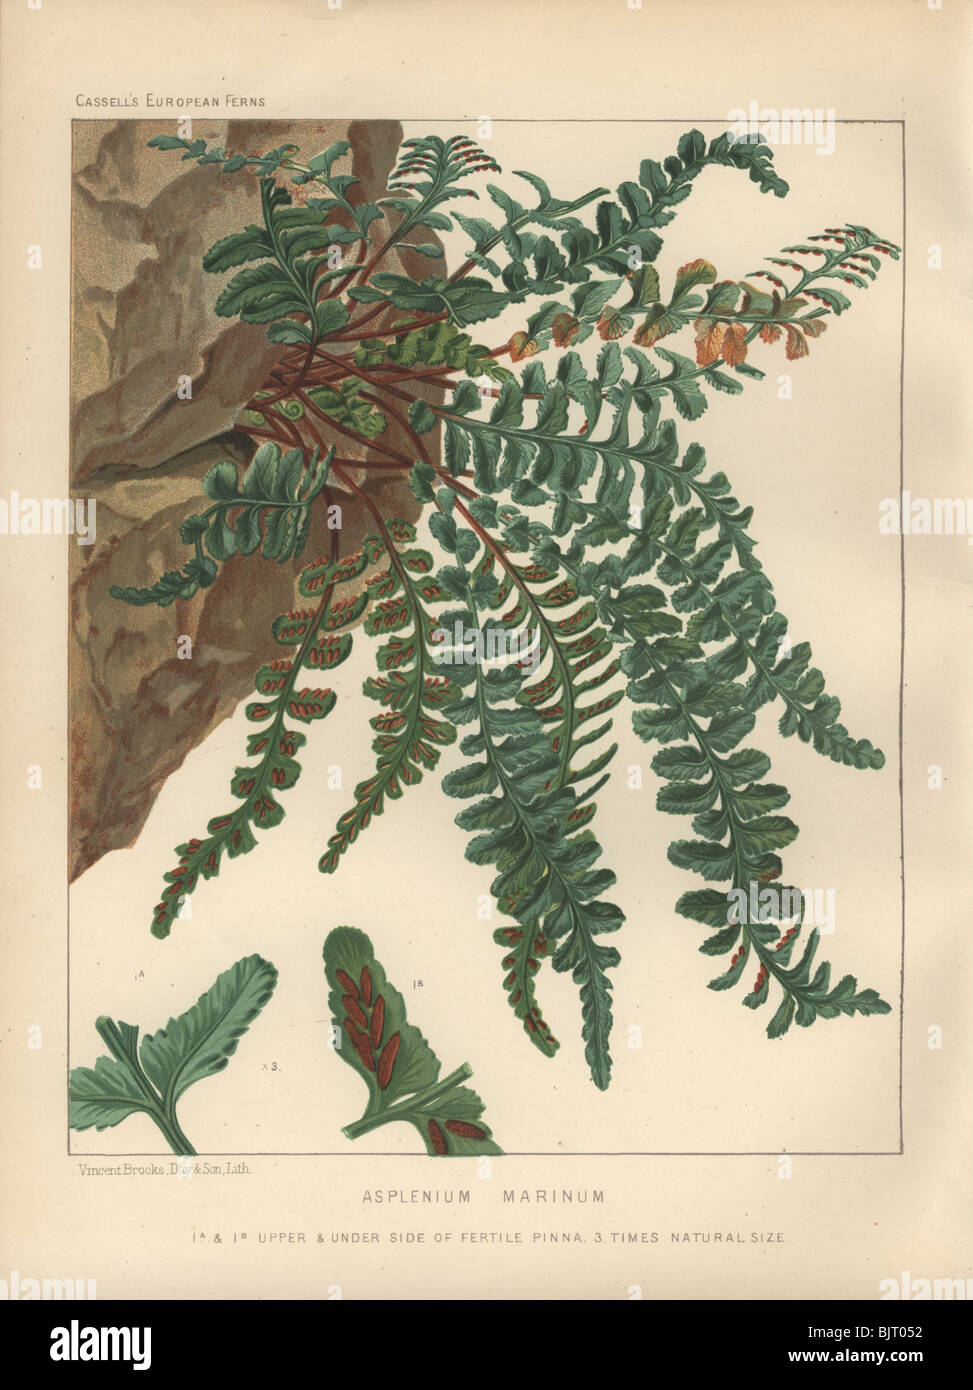 A large clump of sea spleenwort fern (Asplenium marinum) cascading down a rocky cliff. Stock Photo